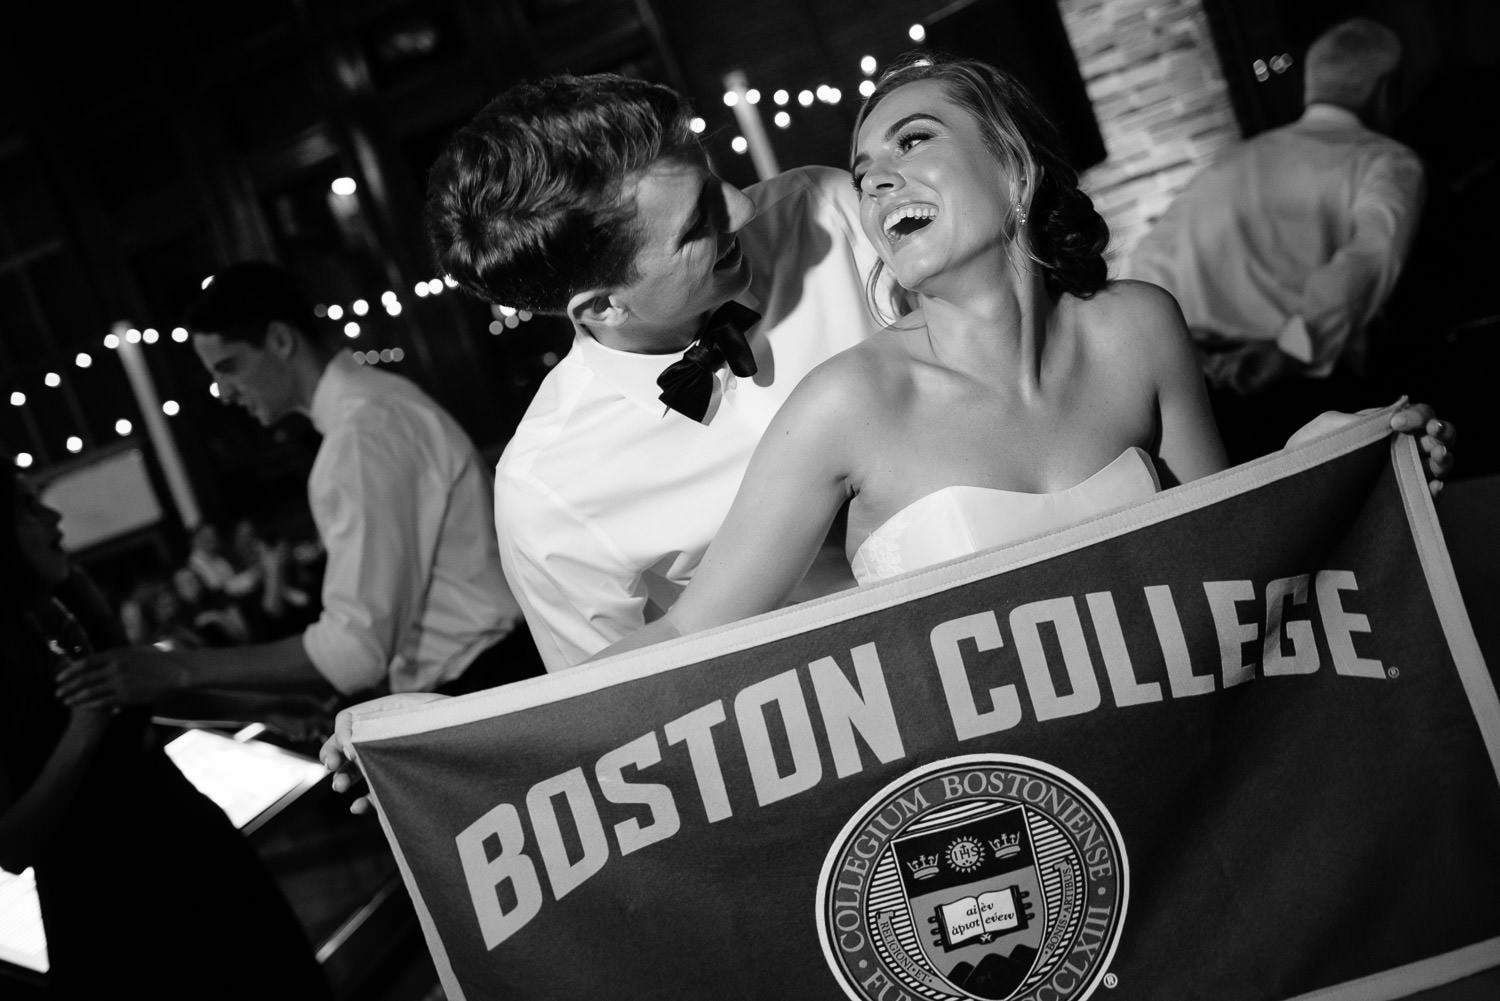 Boston College alumni celebrate wedding at waterworks museum